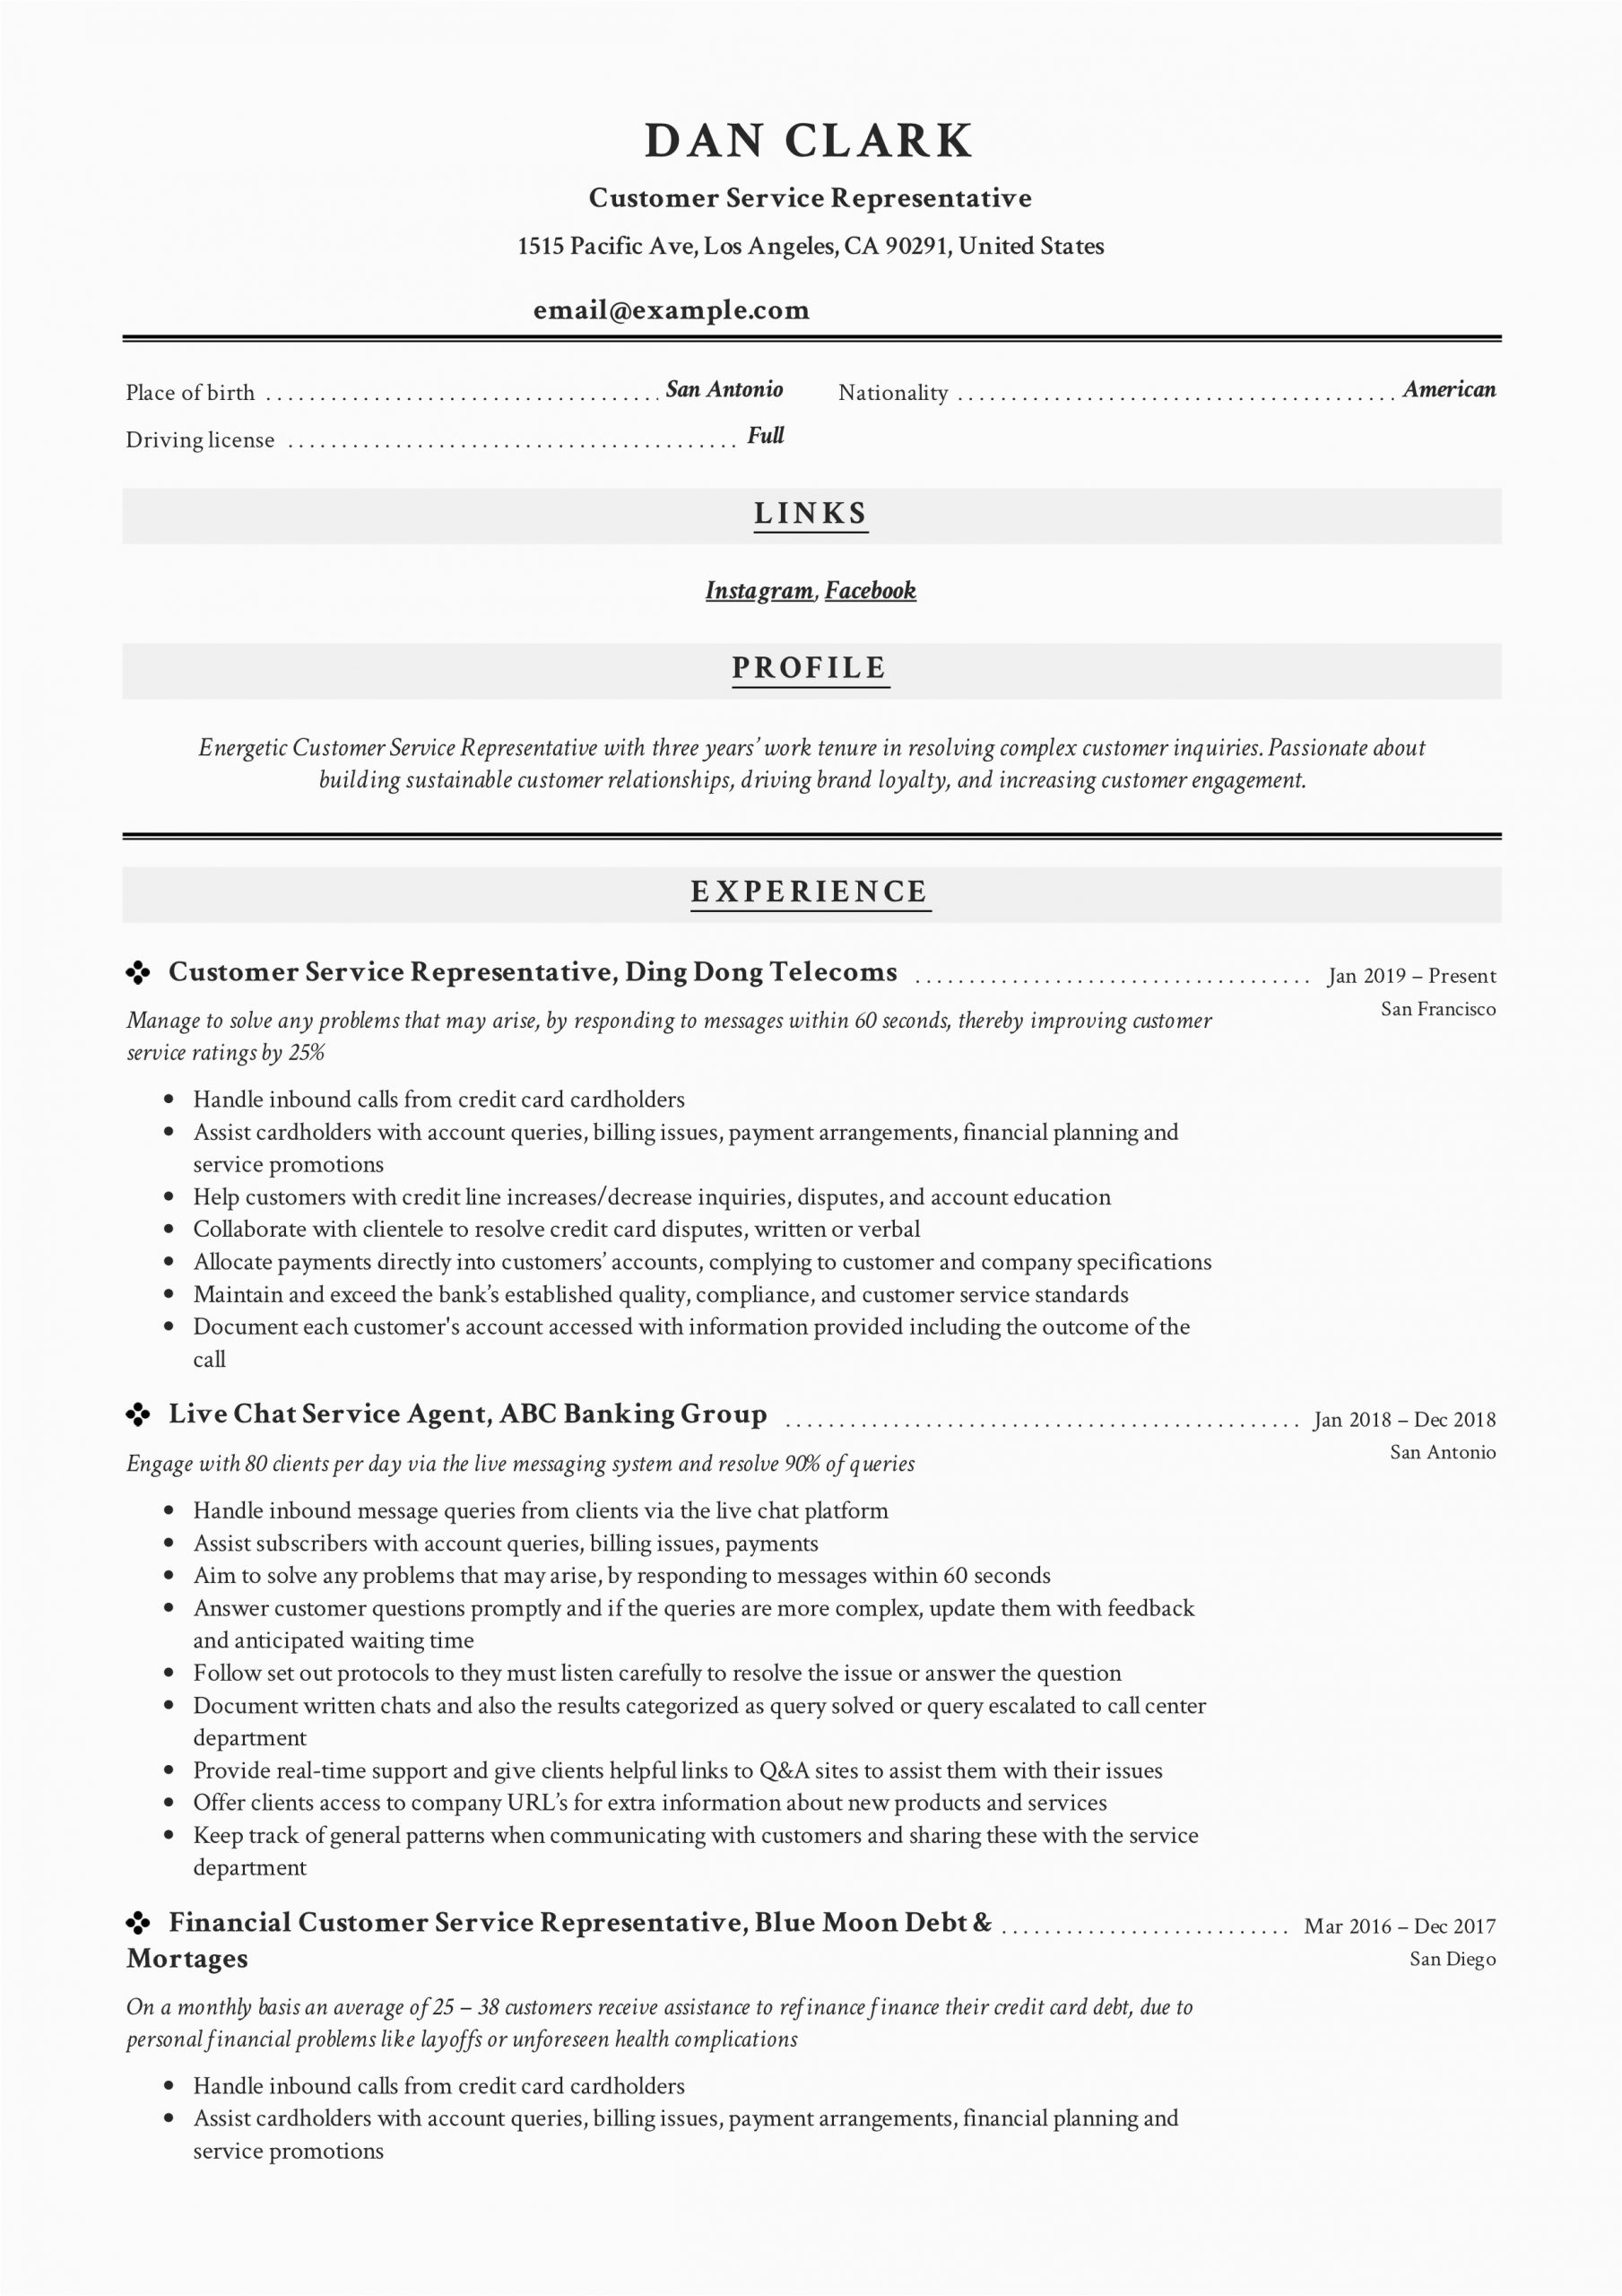 Customer Service Job Description Sample Resume How to Customer Service Representative Resume & 12 Pdf